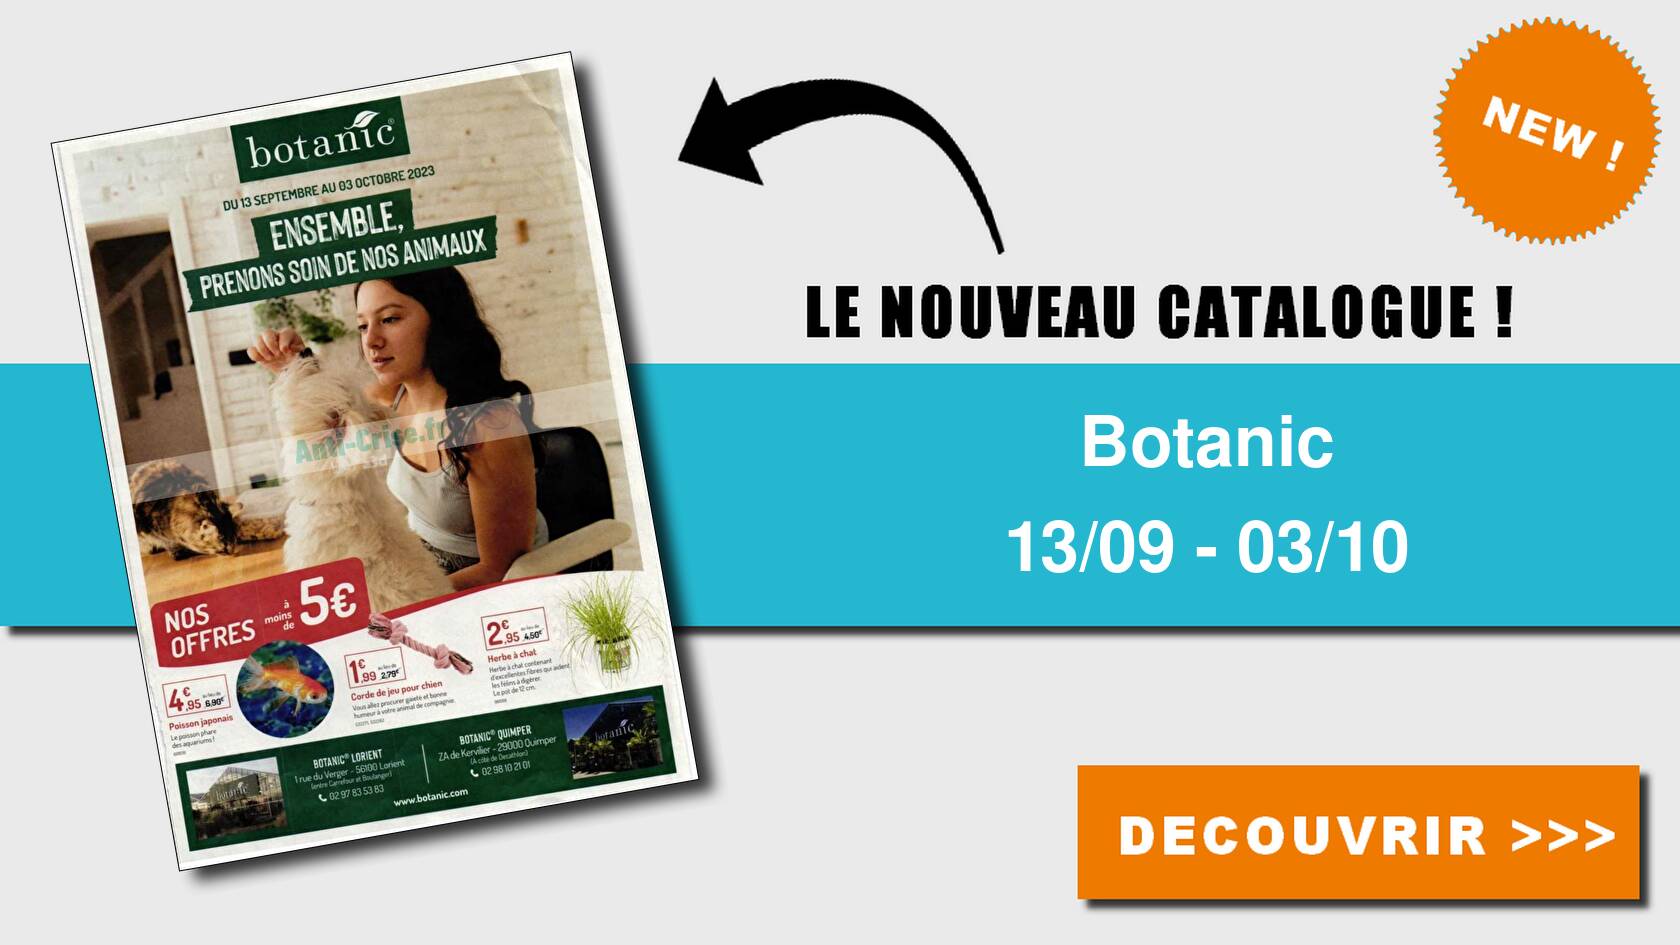 Herbe à chat : botanic - botanic®